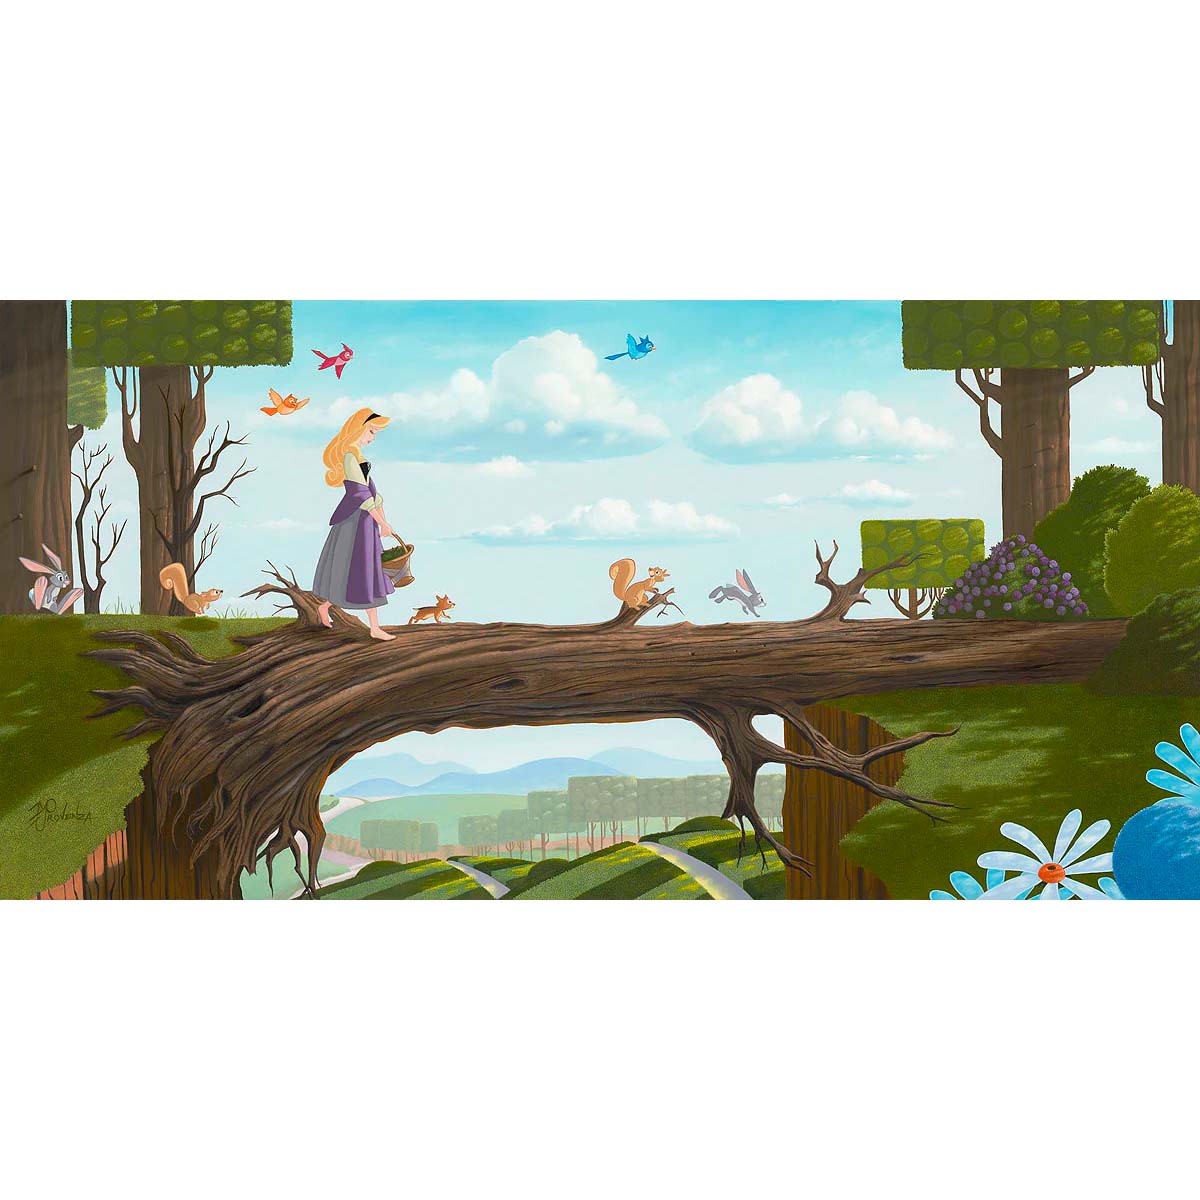 Michael Provenza Disney "Natural Bridge" Limited Edition Canvas Giclee